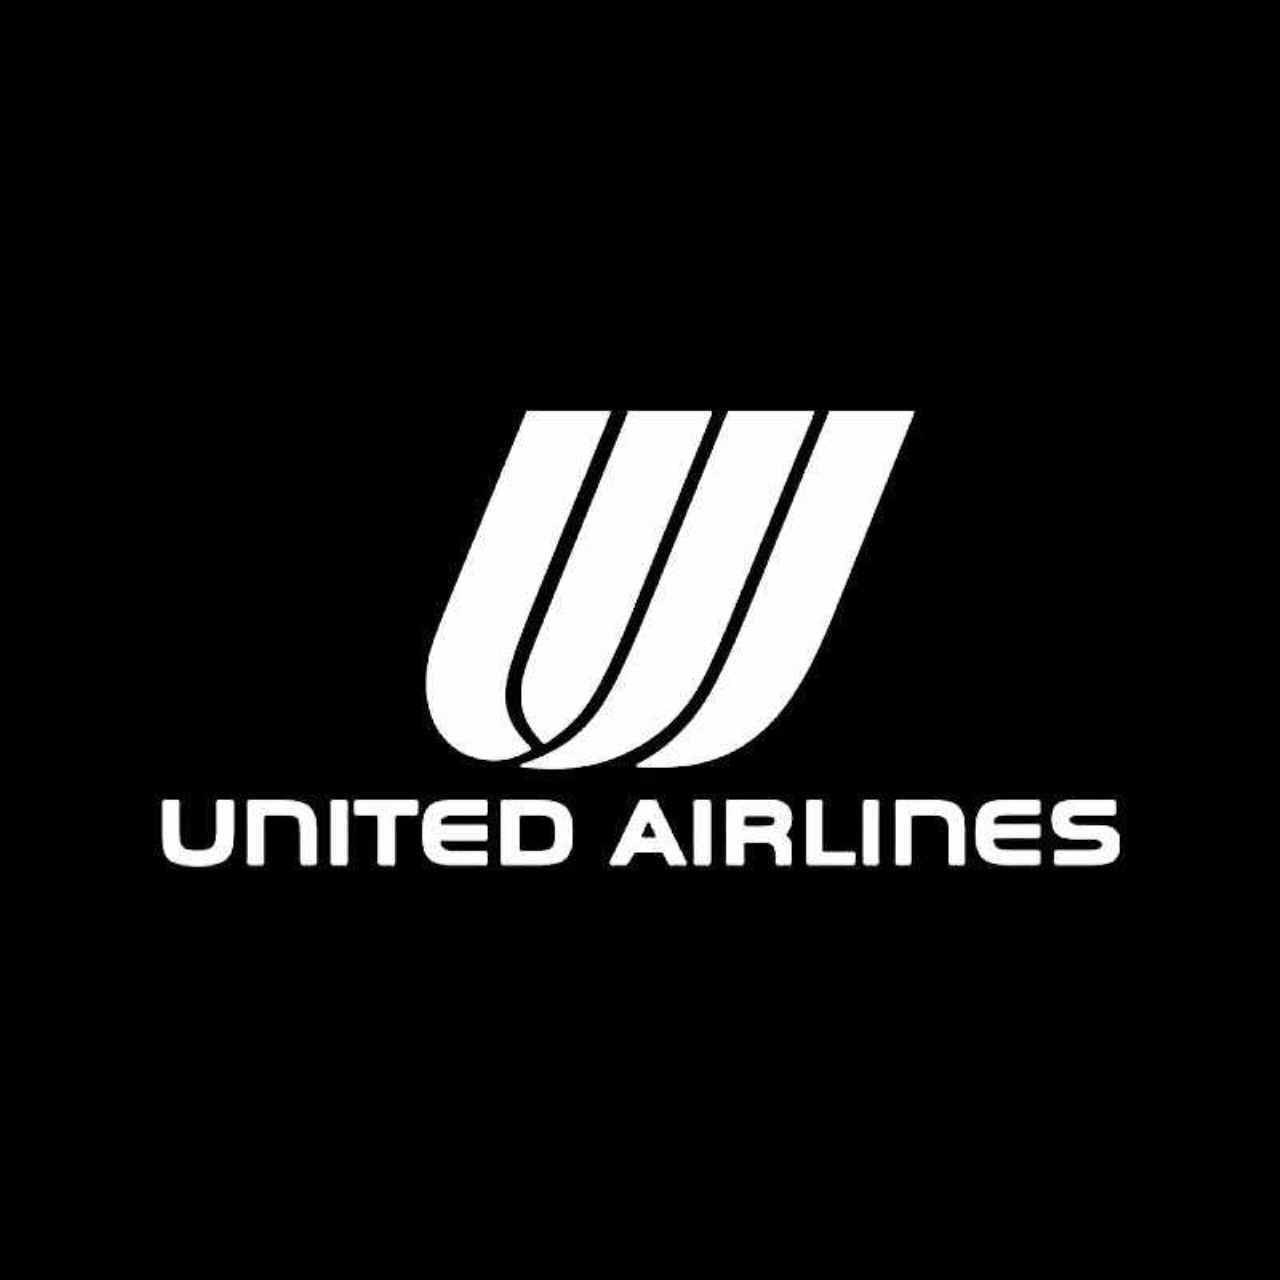 United Airlines Logo 1 Vinyl Decal Sticker